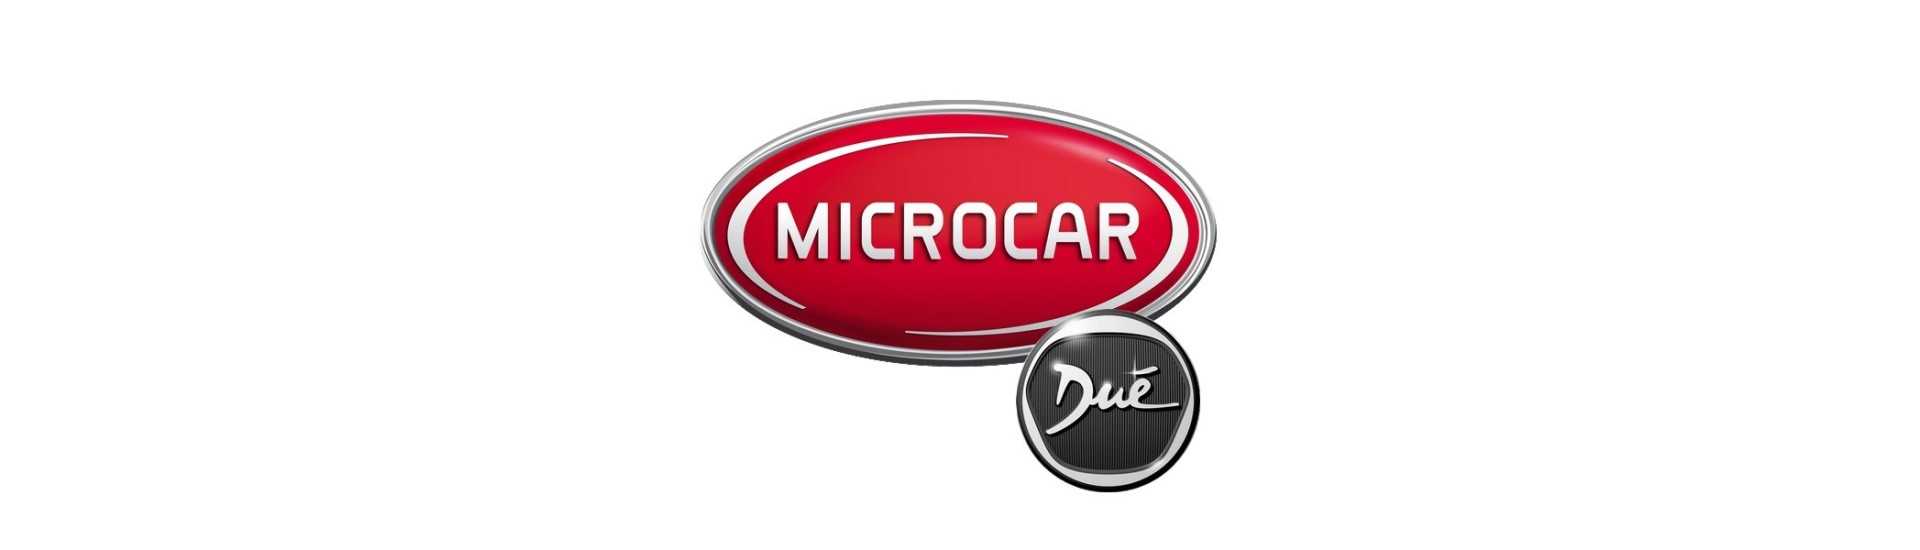 Parhaat hinnat autolle ilman lupaa Microcar Dué